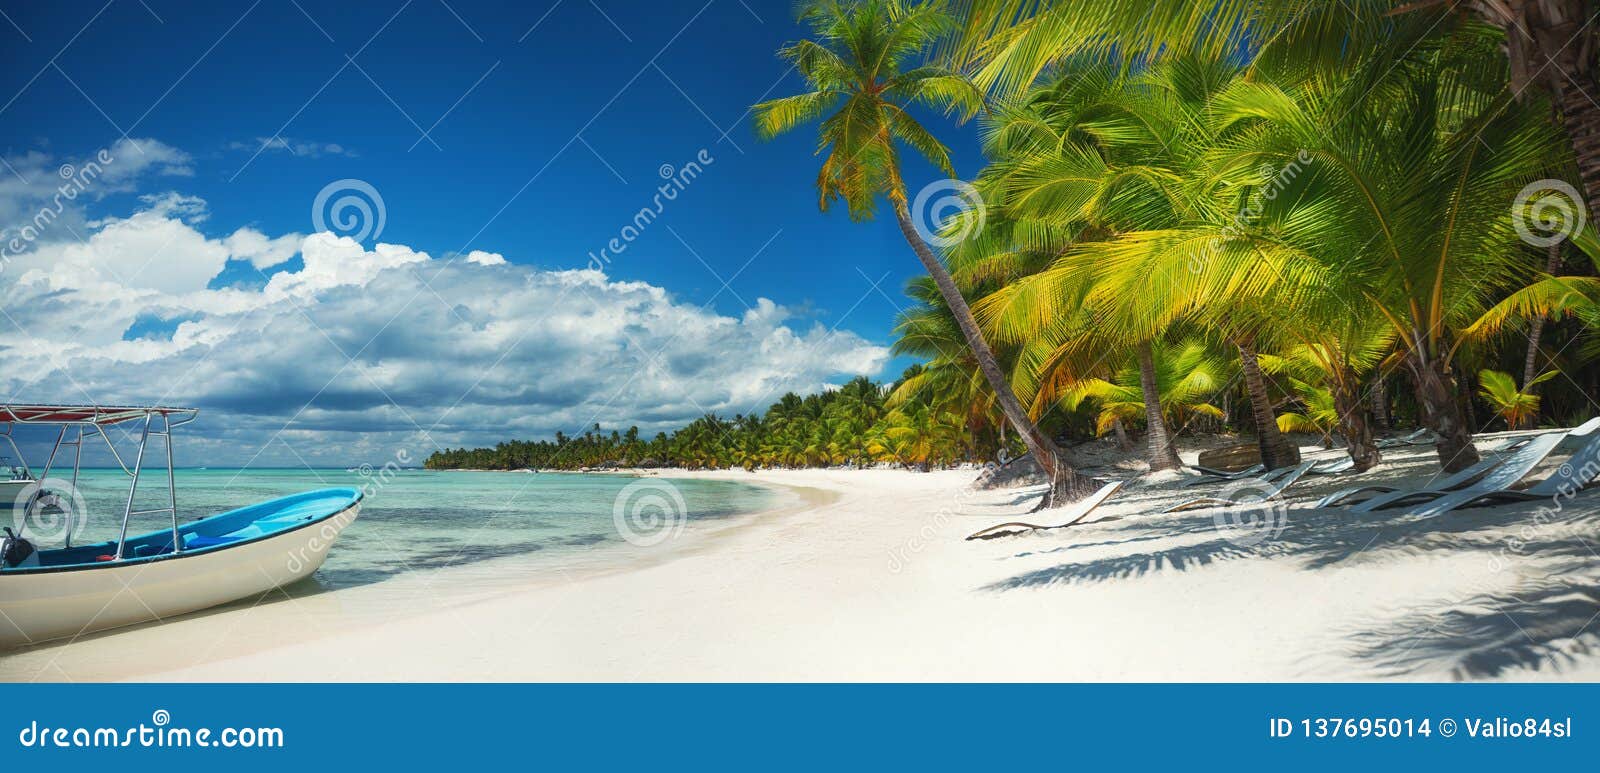 palm trees on the tropical beach, dominican republic. saona island.